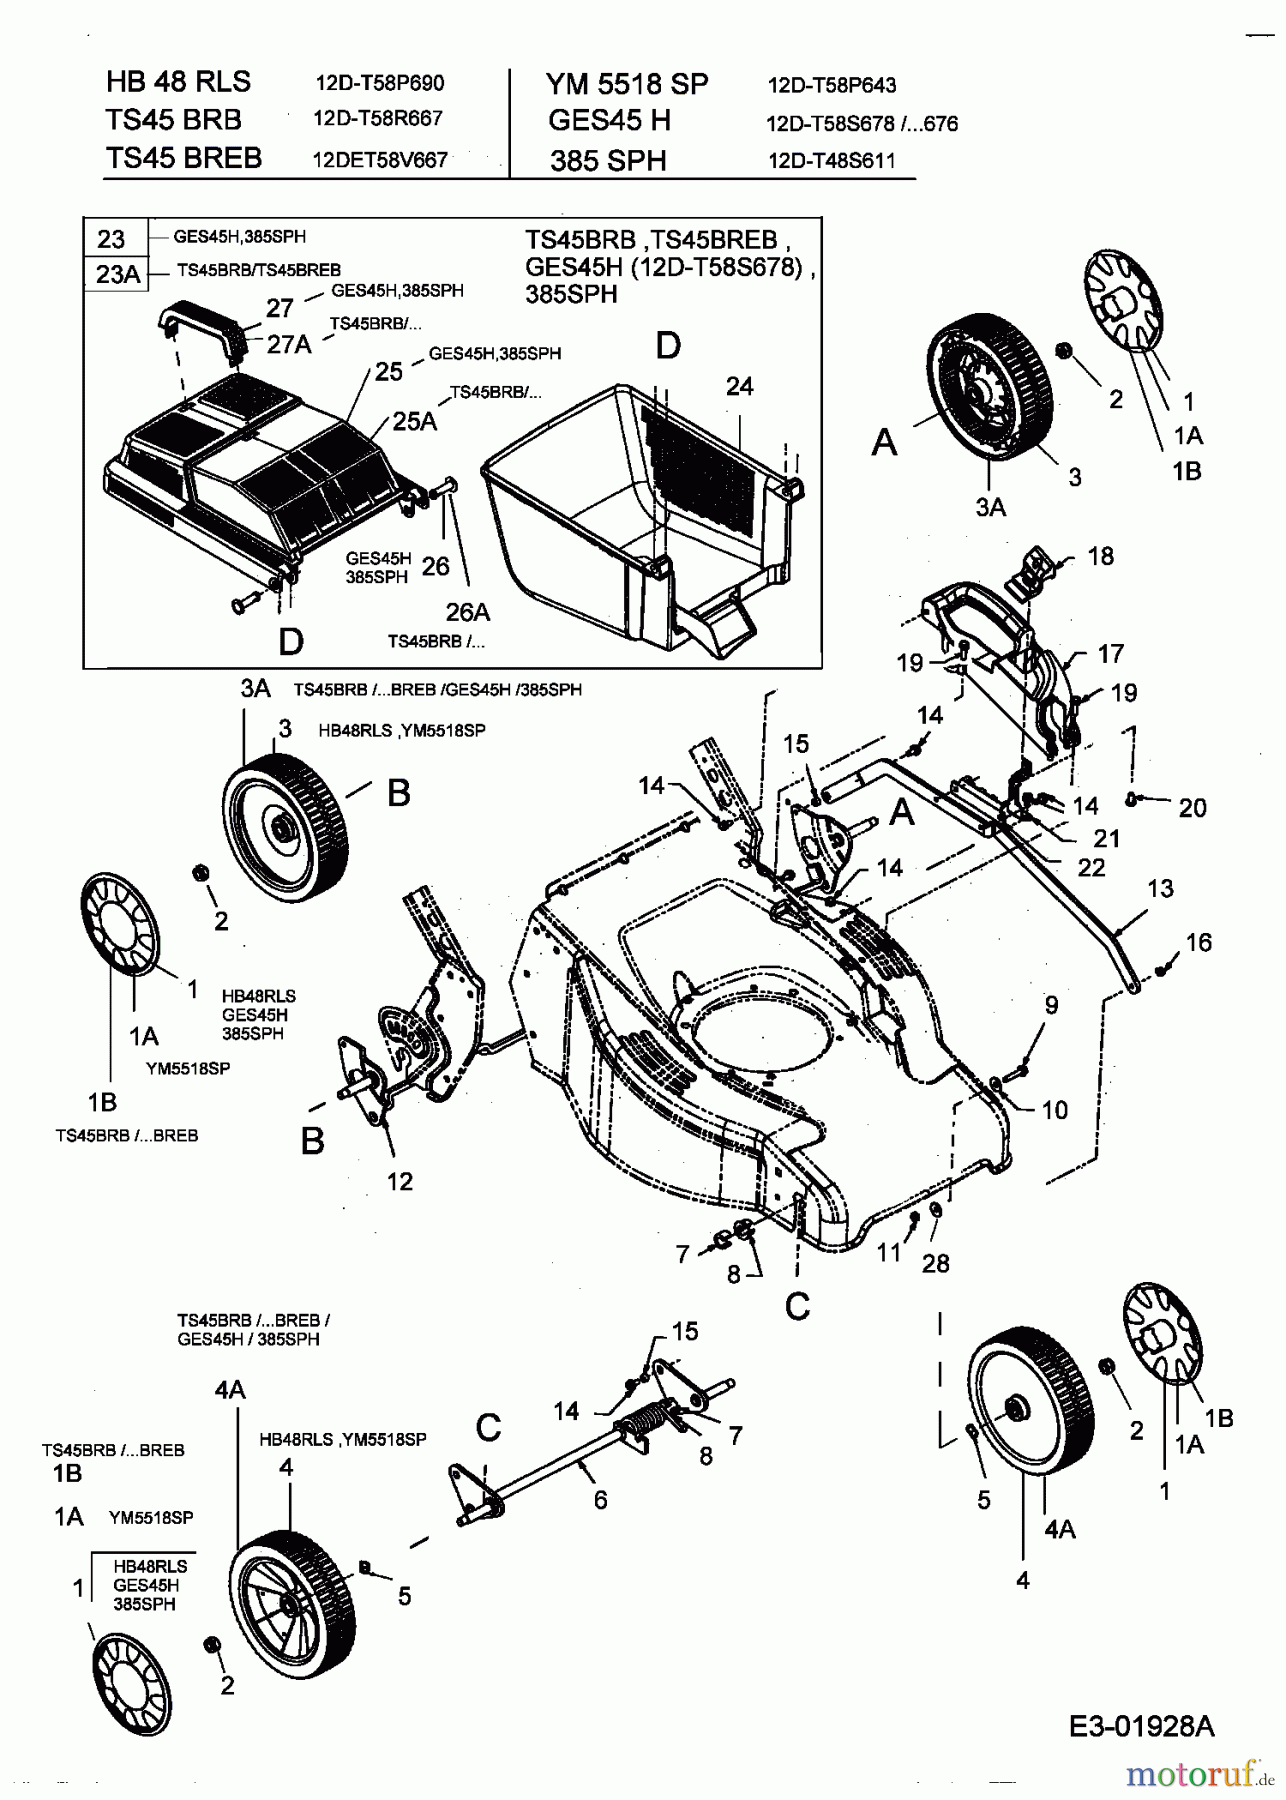  Lawnflite Petrol mower self propelled 385 SPH 12D-T48S611  (2004) Grass box, Wheels, Cutting hight adjustment